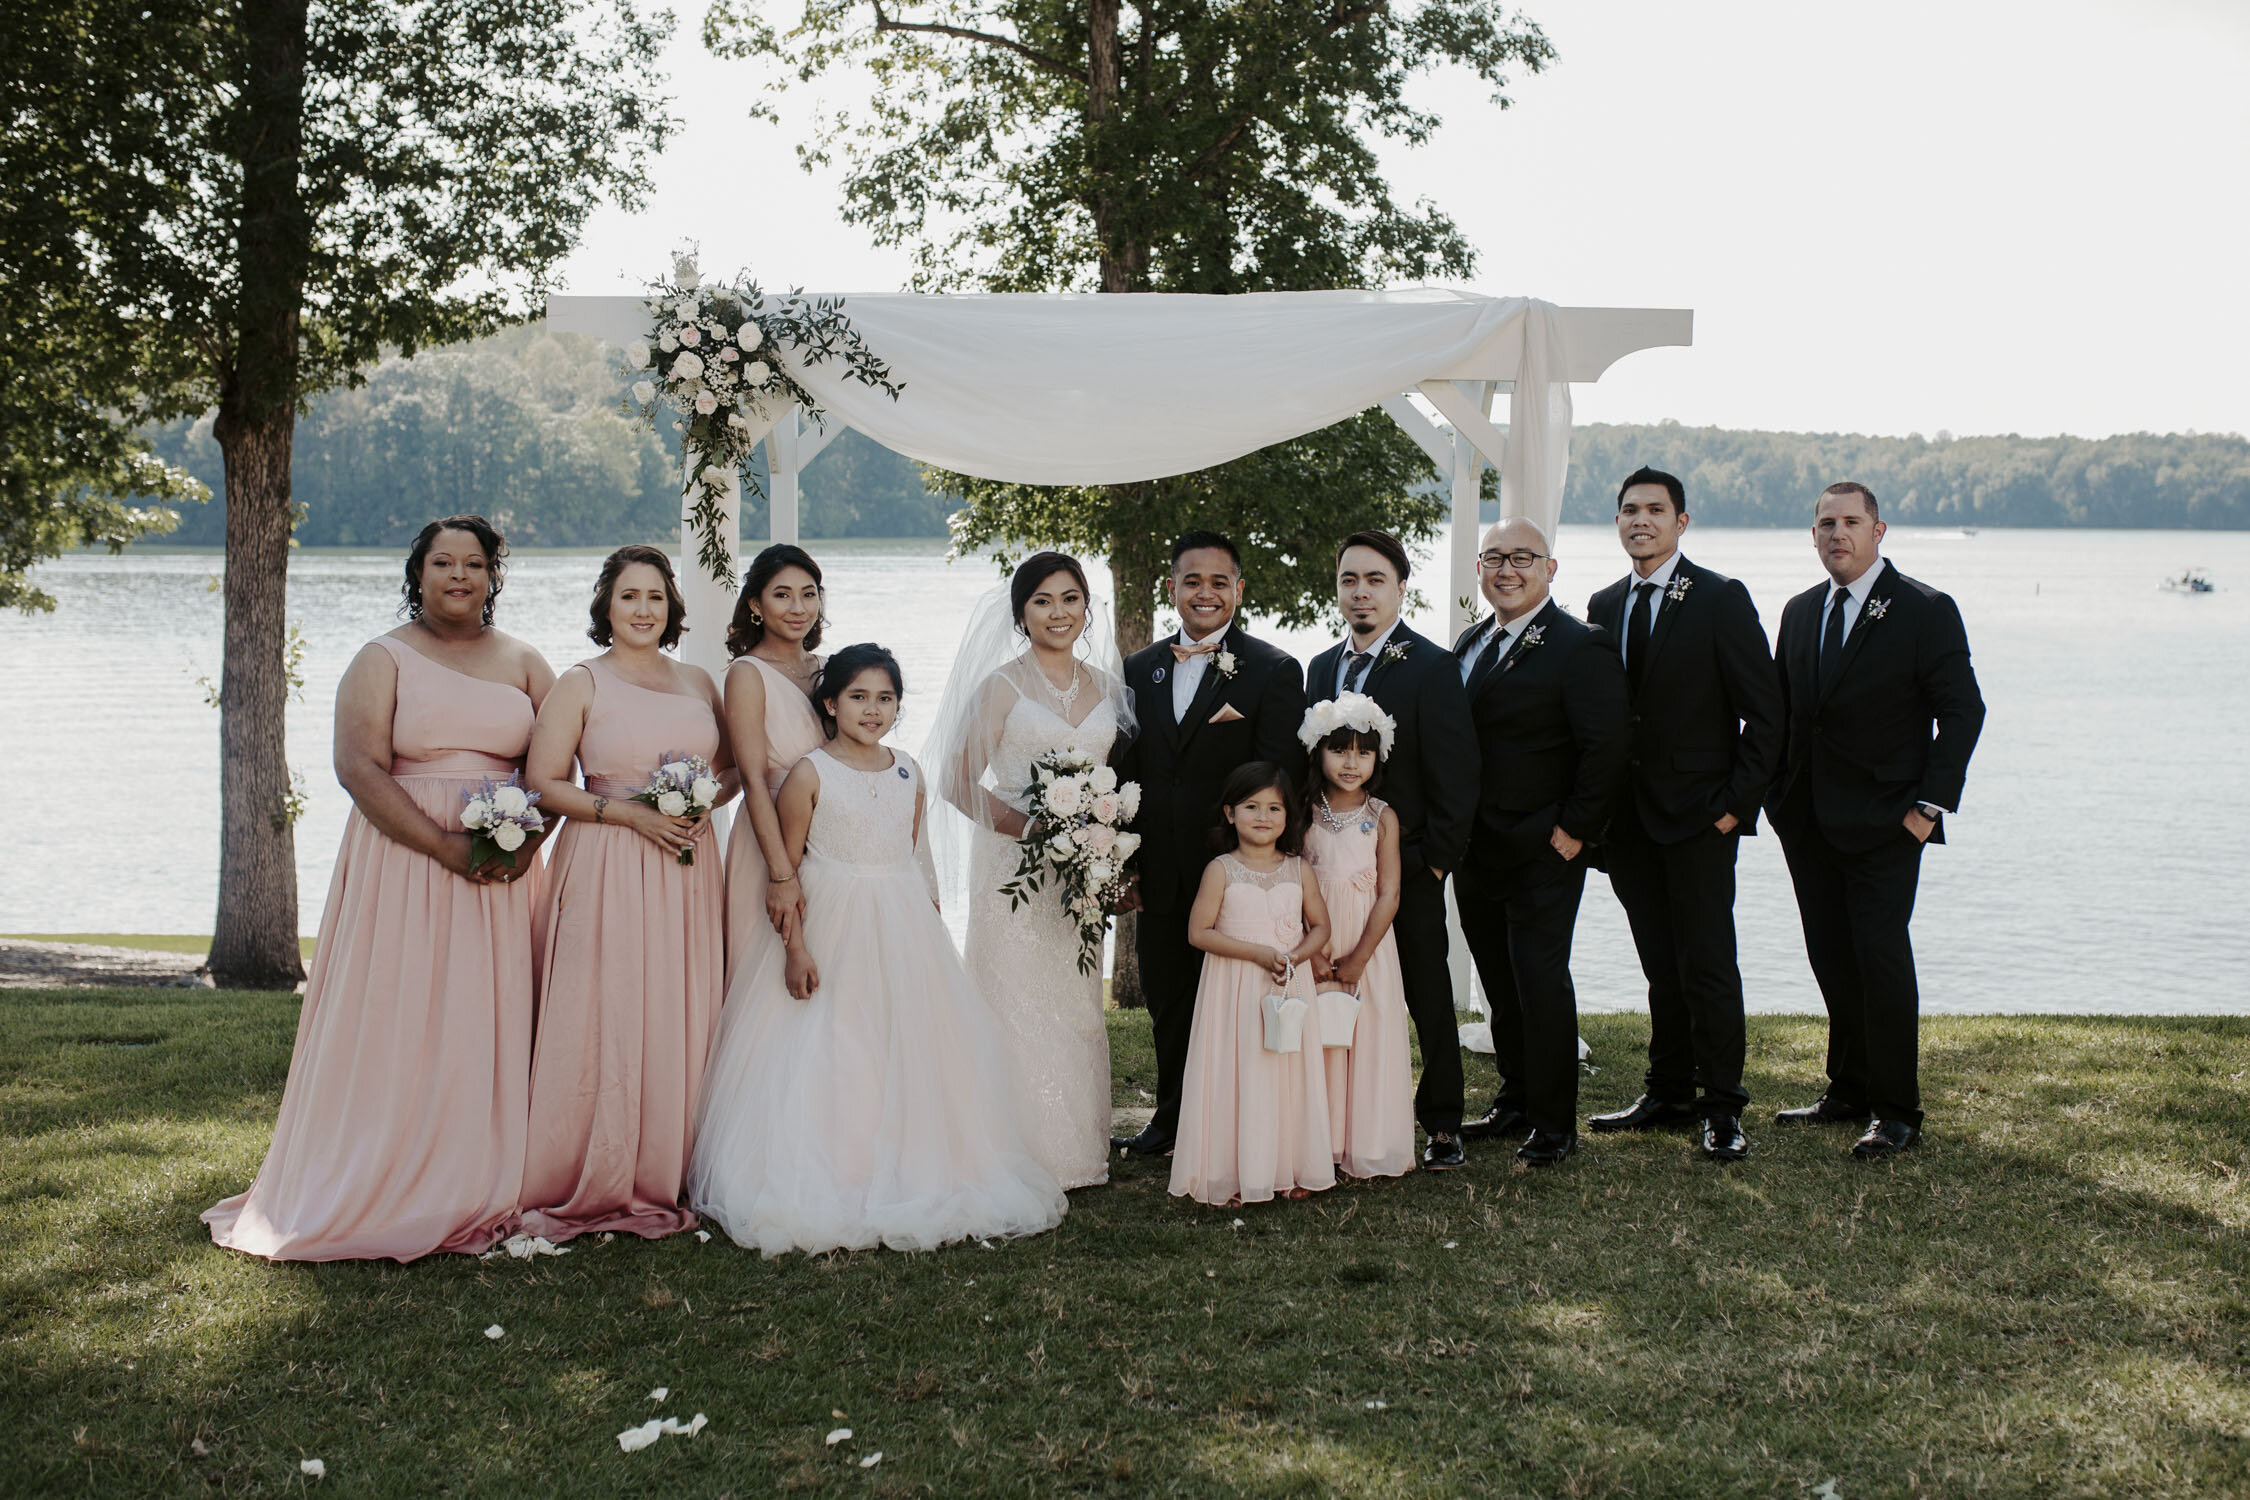 Greensboro Winston-Salem, NC Wedding Photography at Belews Lake | Bella Collina Mansion Wedding Party Portraits | Kayli LaFon Wedding Photographer